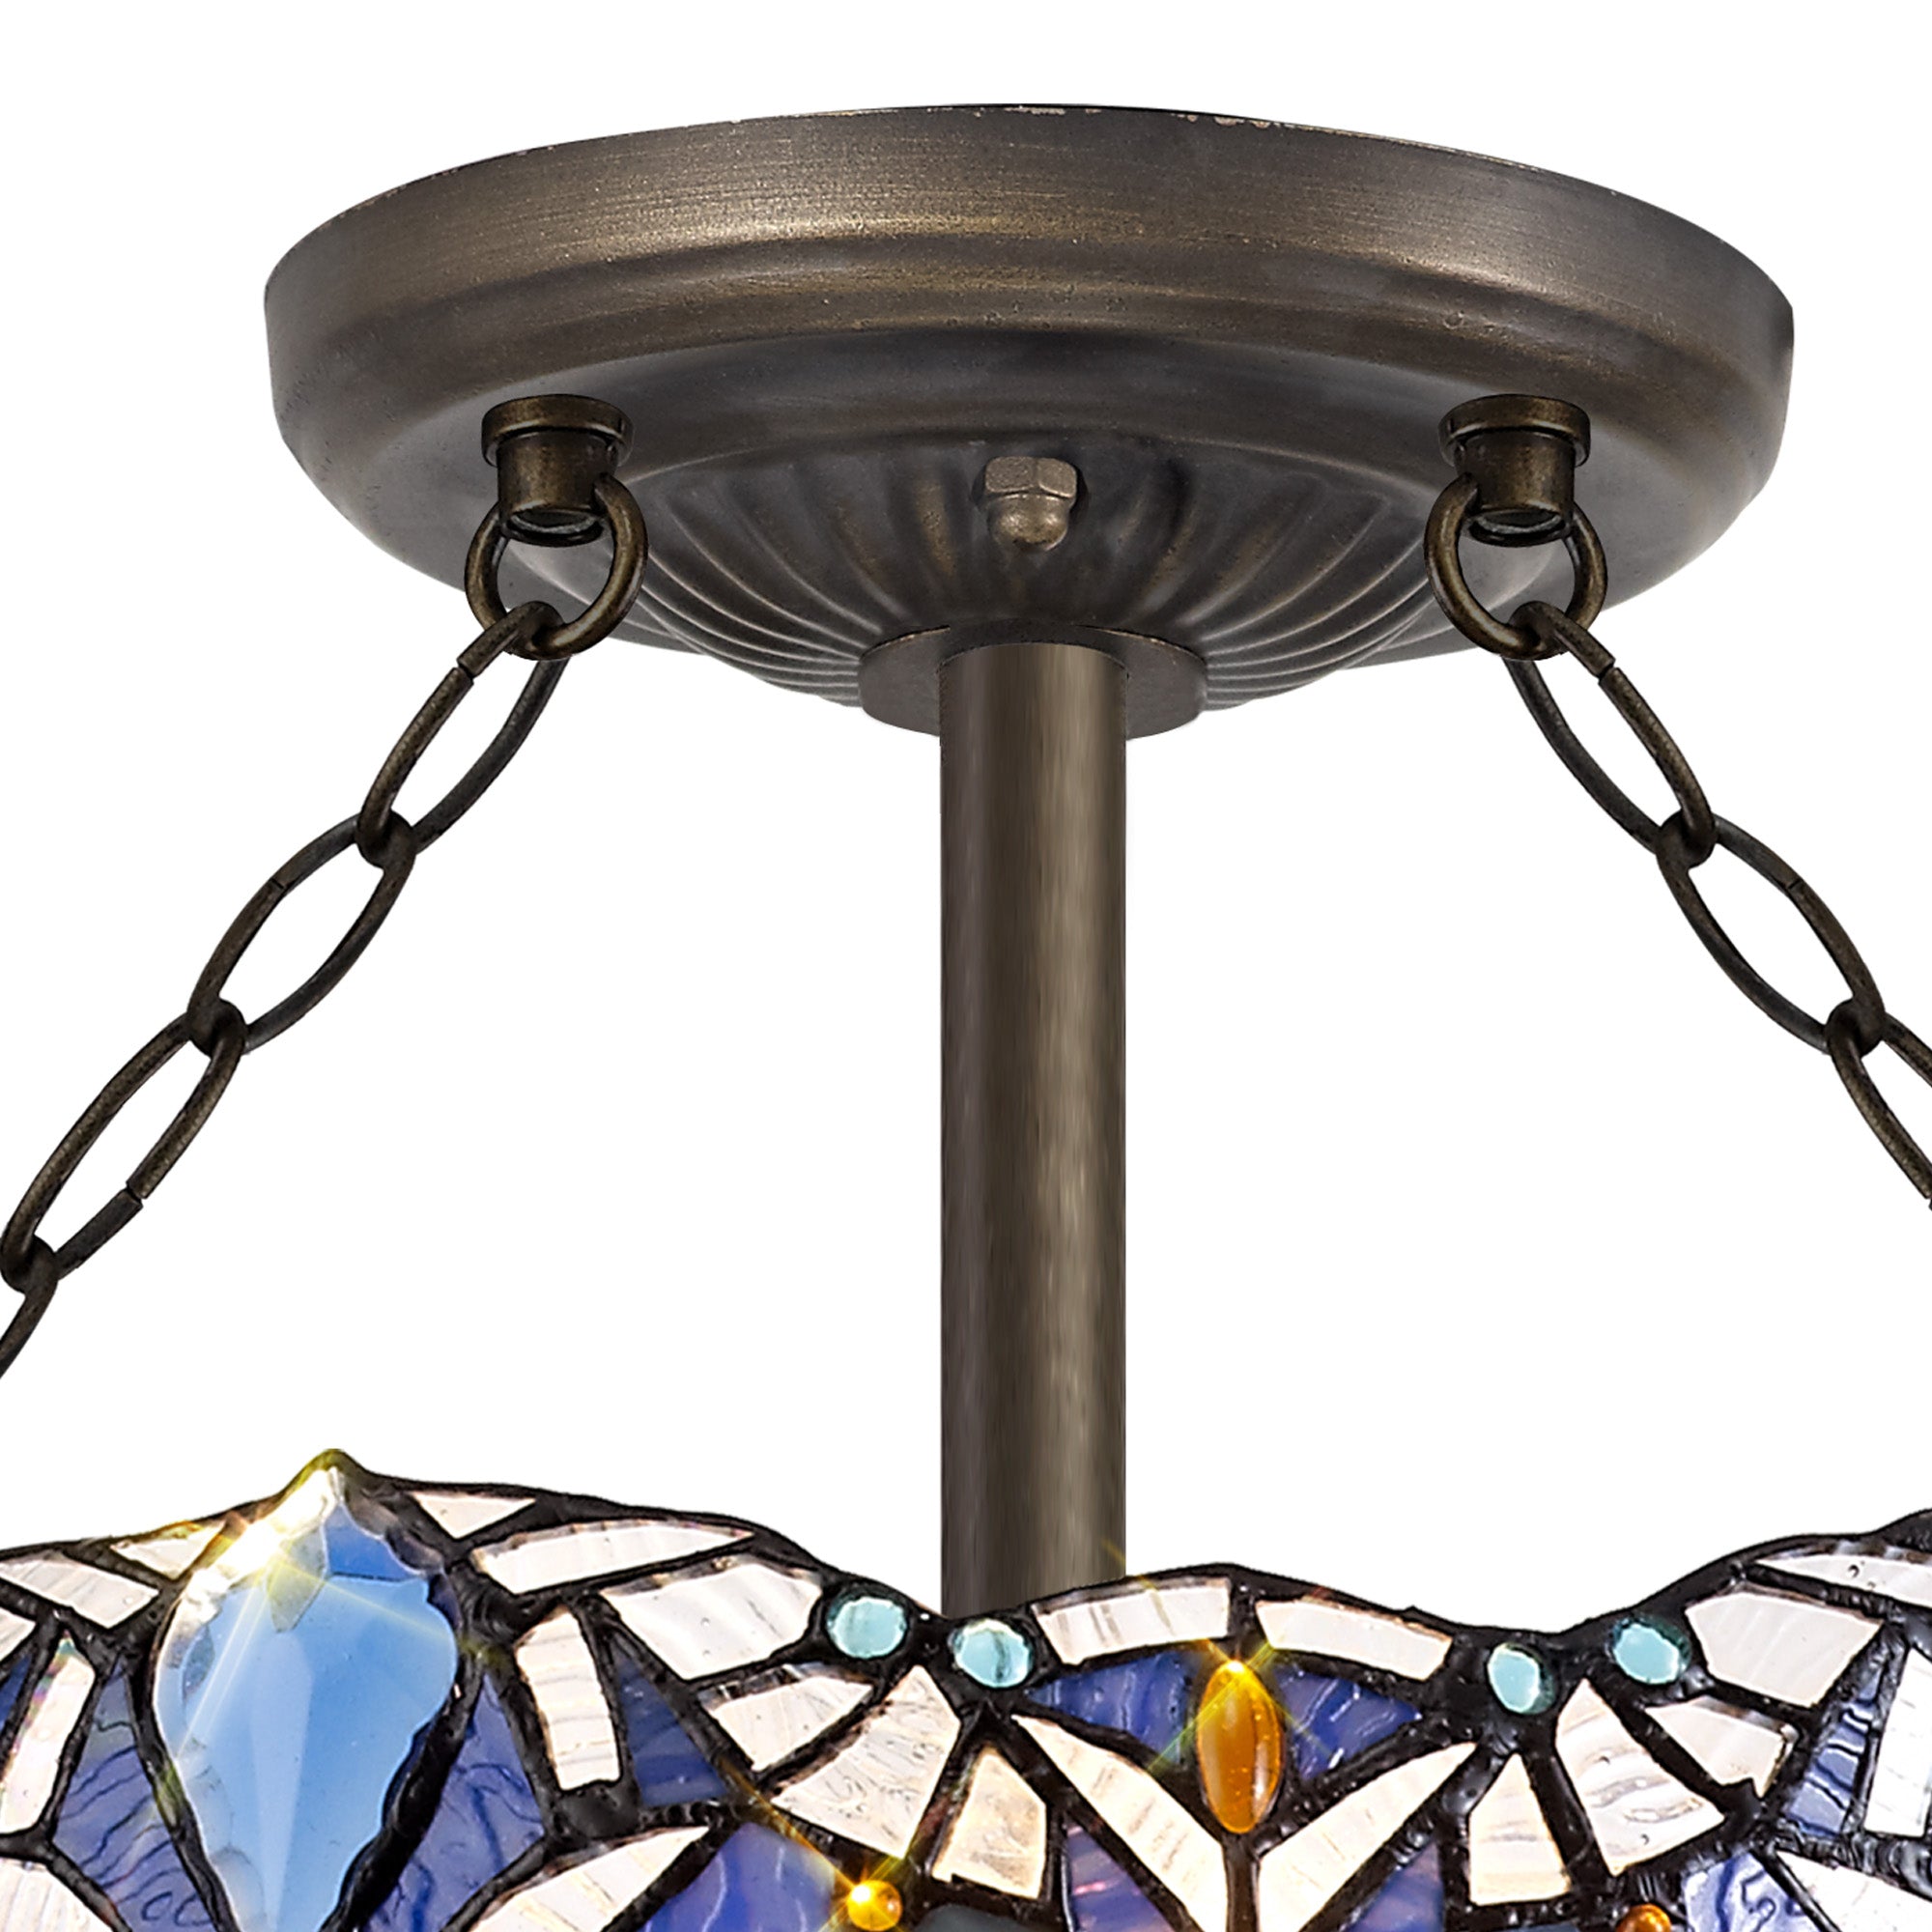 Oksana 2/3 Light Medium/Large Indoor Semi Flush Ceiling Light E27 With Tiffany Shade, Blue & Clear Crystal & Aged Antique Brass